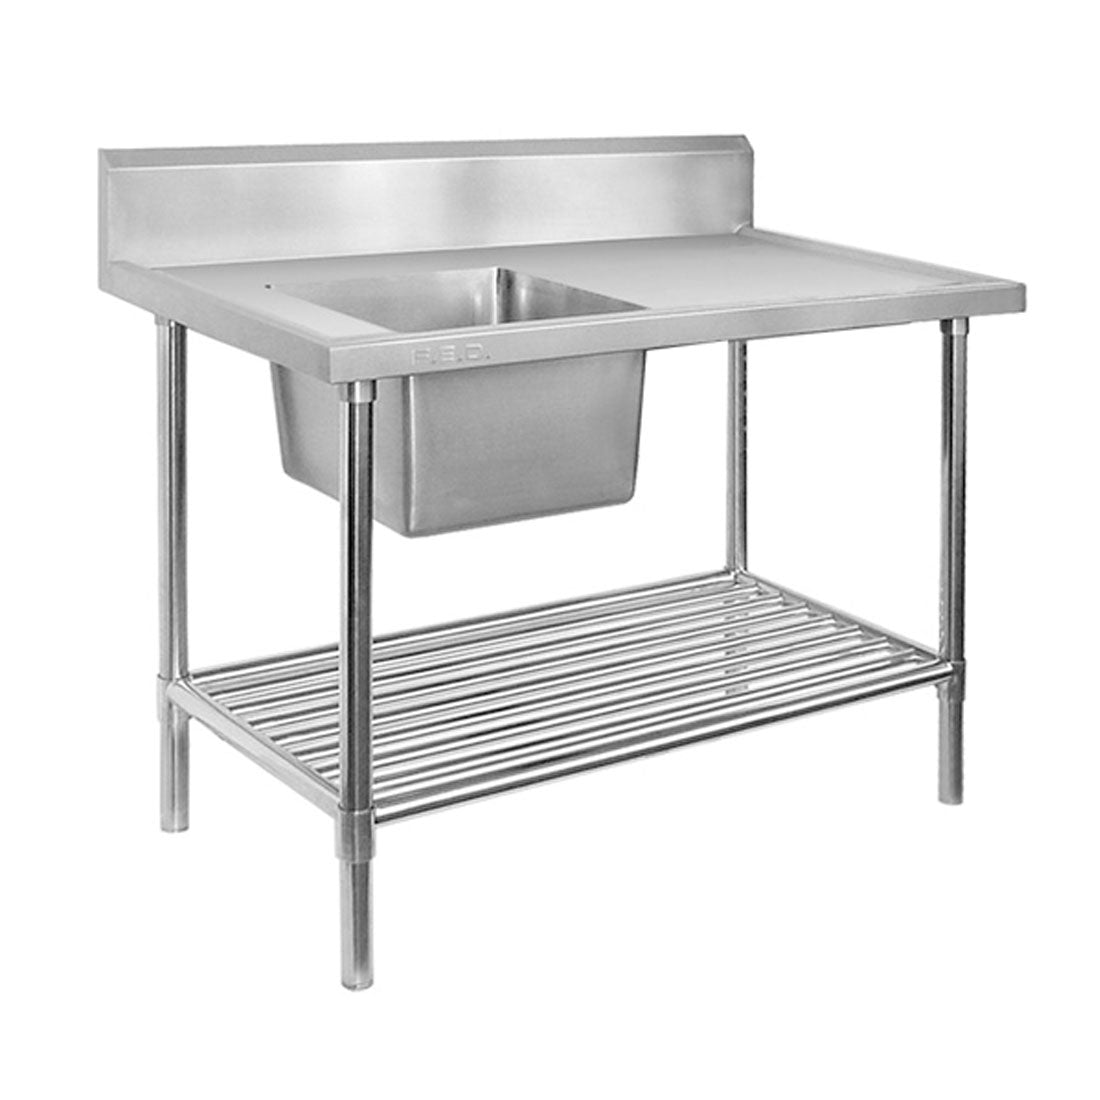 SSB6-2400L/A Single Left Sink Bench with Pot Undershelf